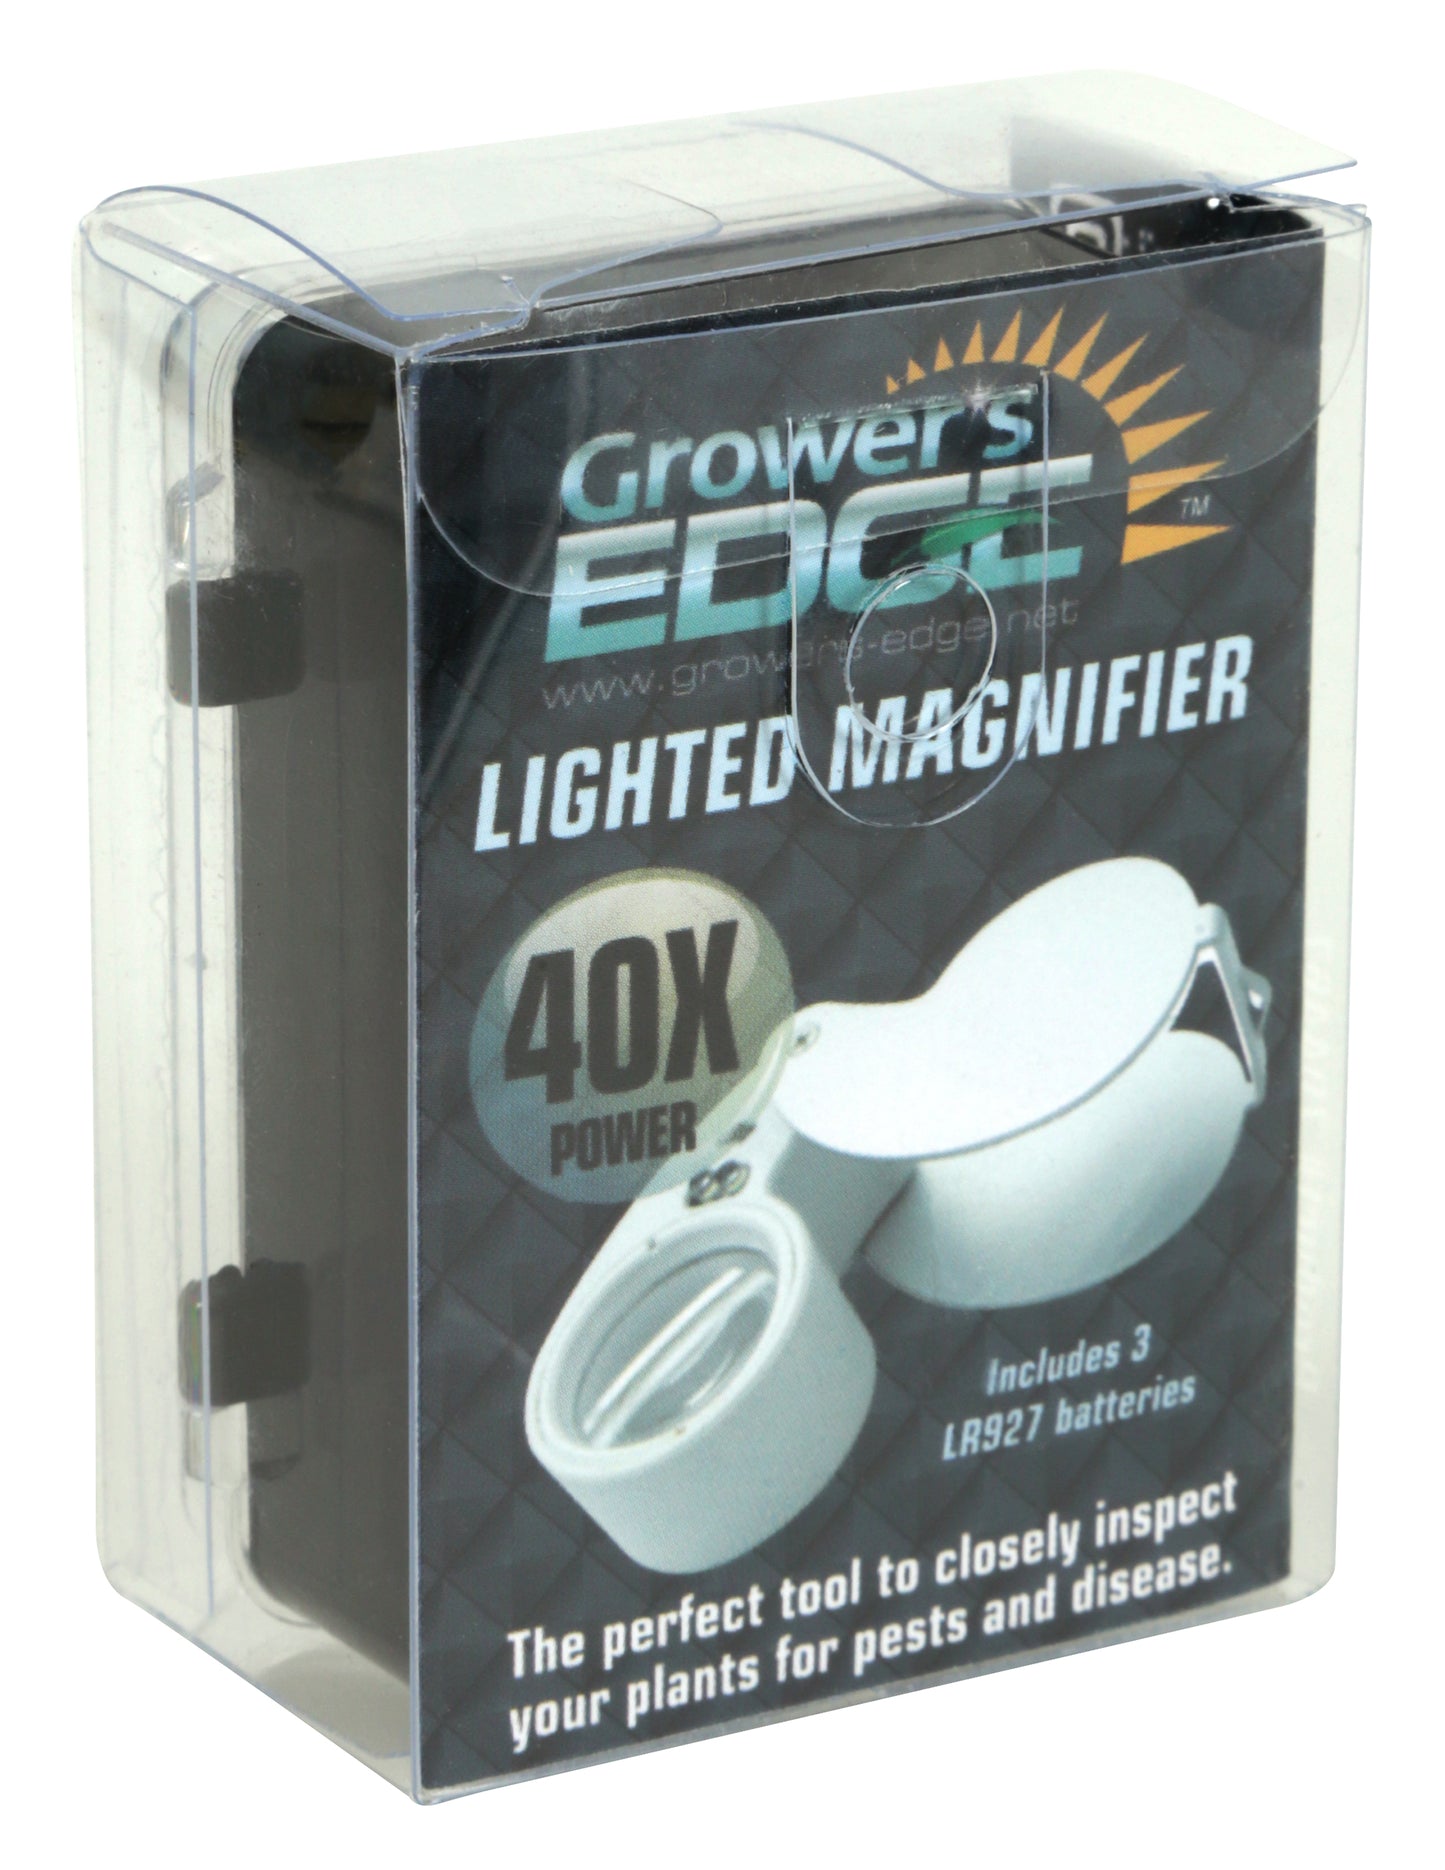 Grower's Edge Loupe Magnifier 40x w/ LED illumination